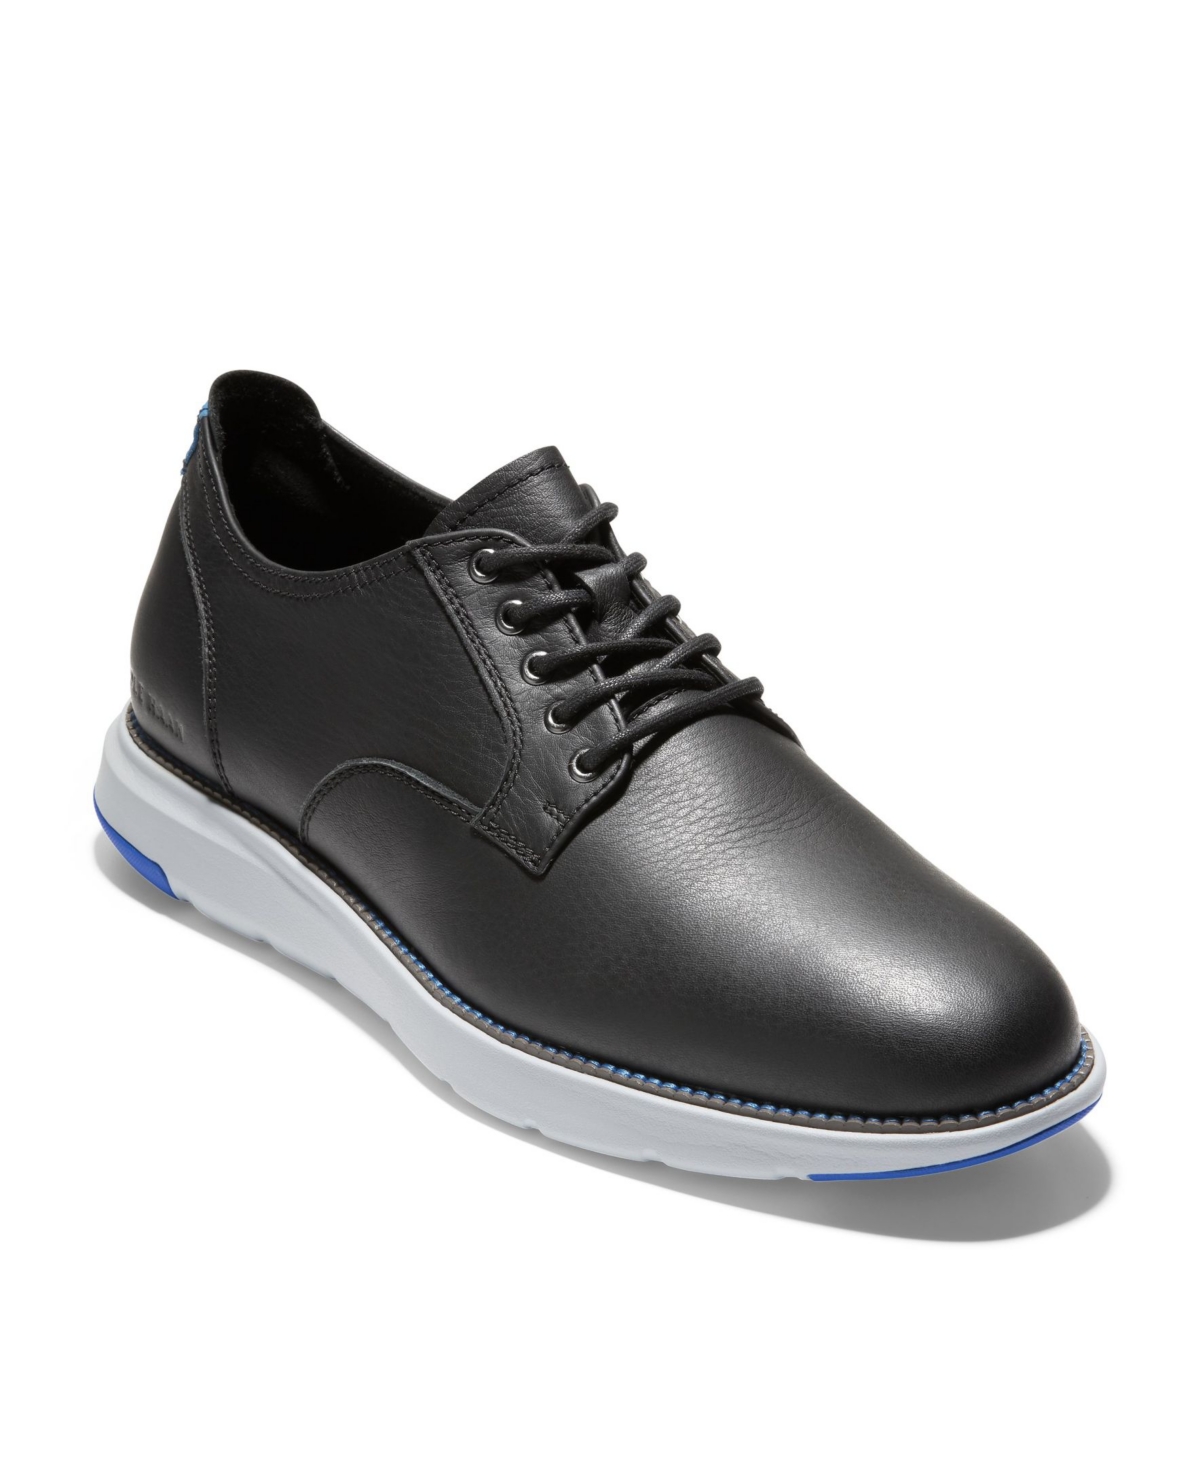 Men's Grand Atlantic Oxford Dress Shoe - Black